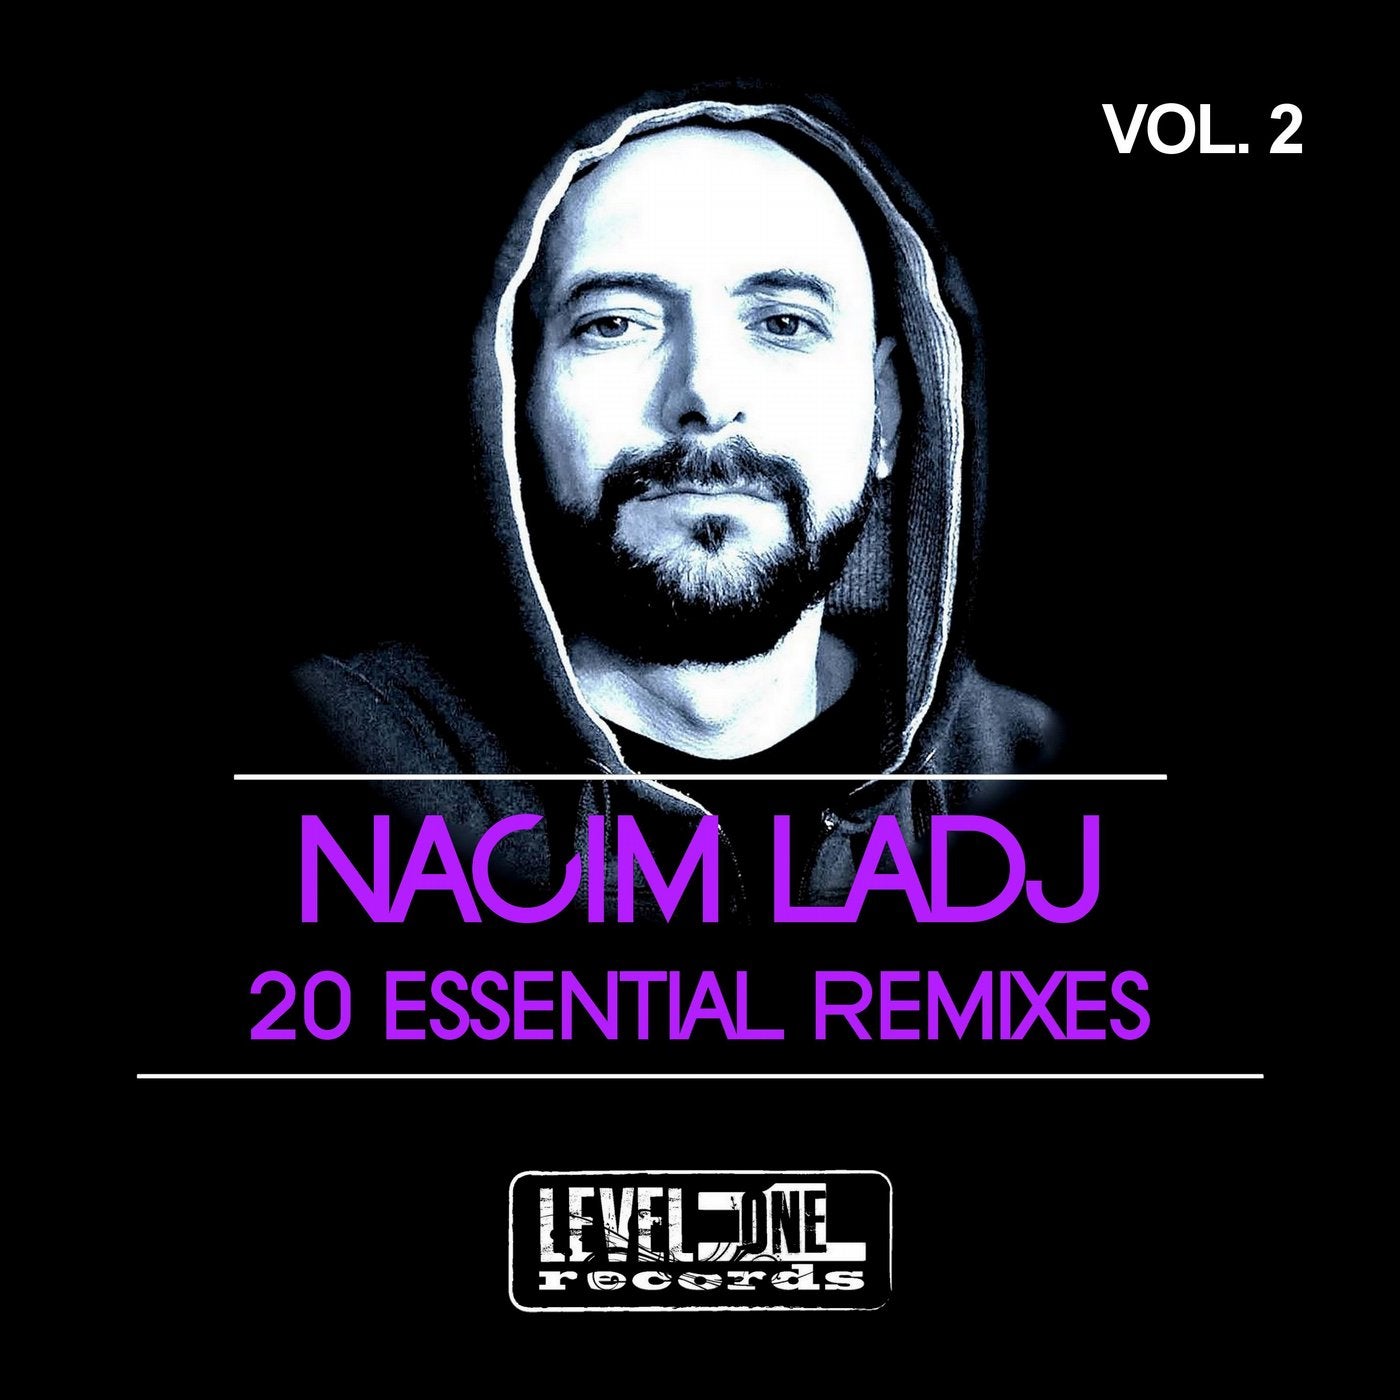 Nacim Ladj 20 Essential Remixes, Vol. 2